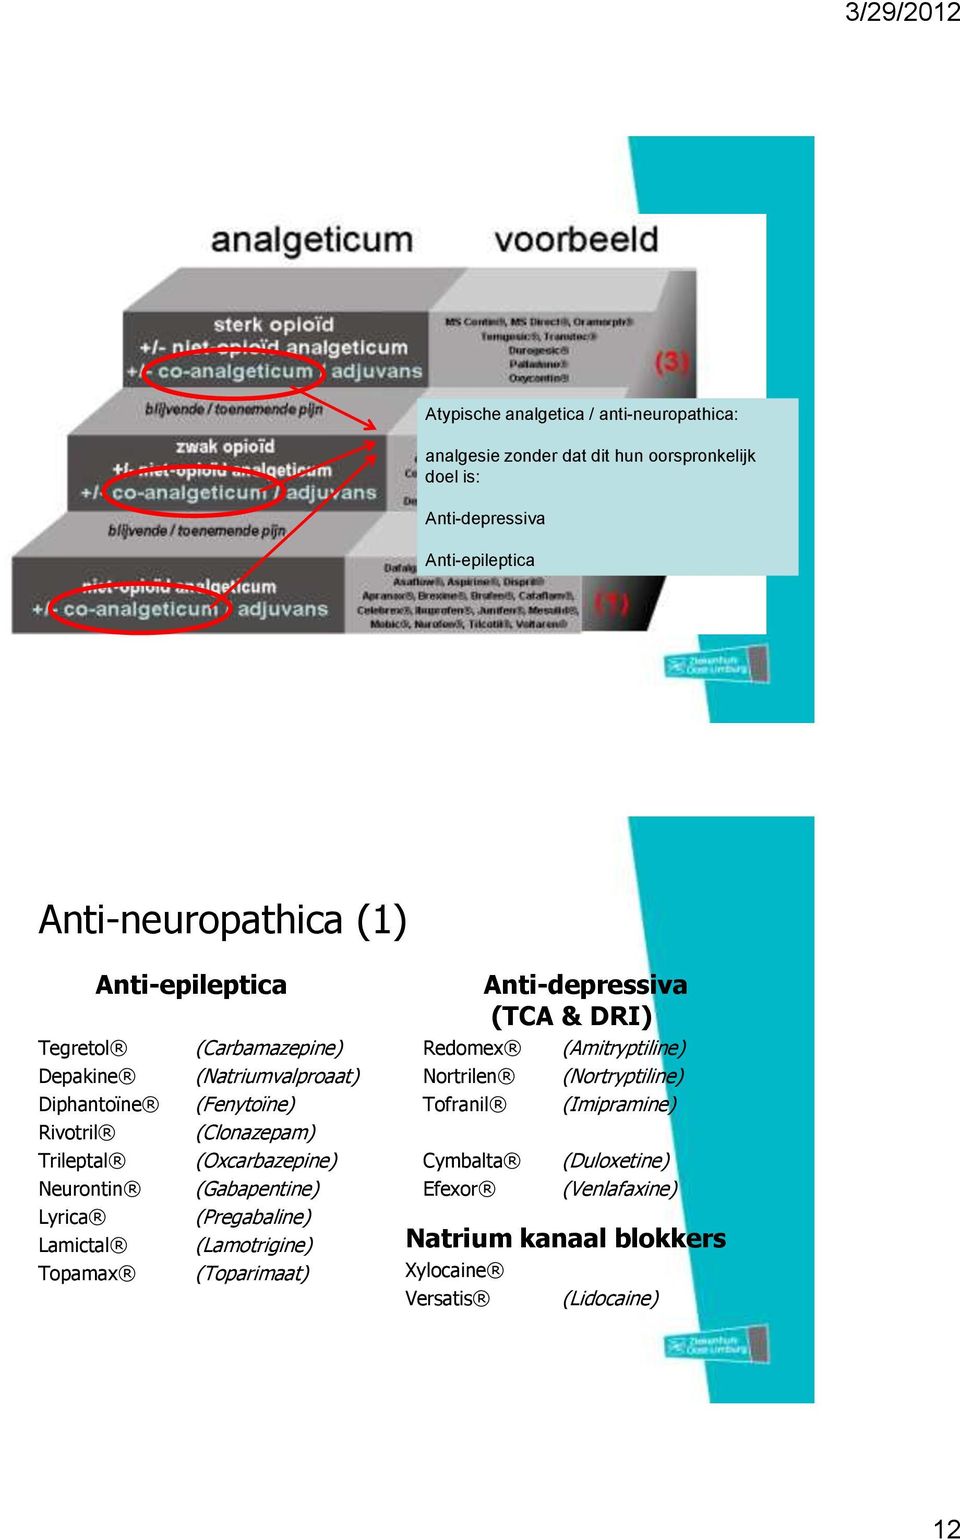 Neurontin (Gabapentine) Lyrica (Pregabaline) Lamictal (Lamotrigine) Topamax (Toparimaat) Anti-depressiva (TCA & DRI) Redomex (Amitryptiline)